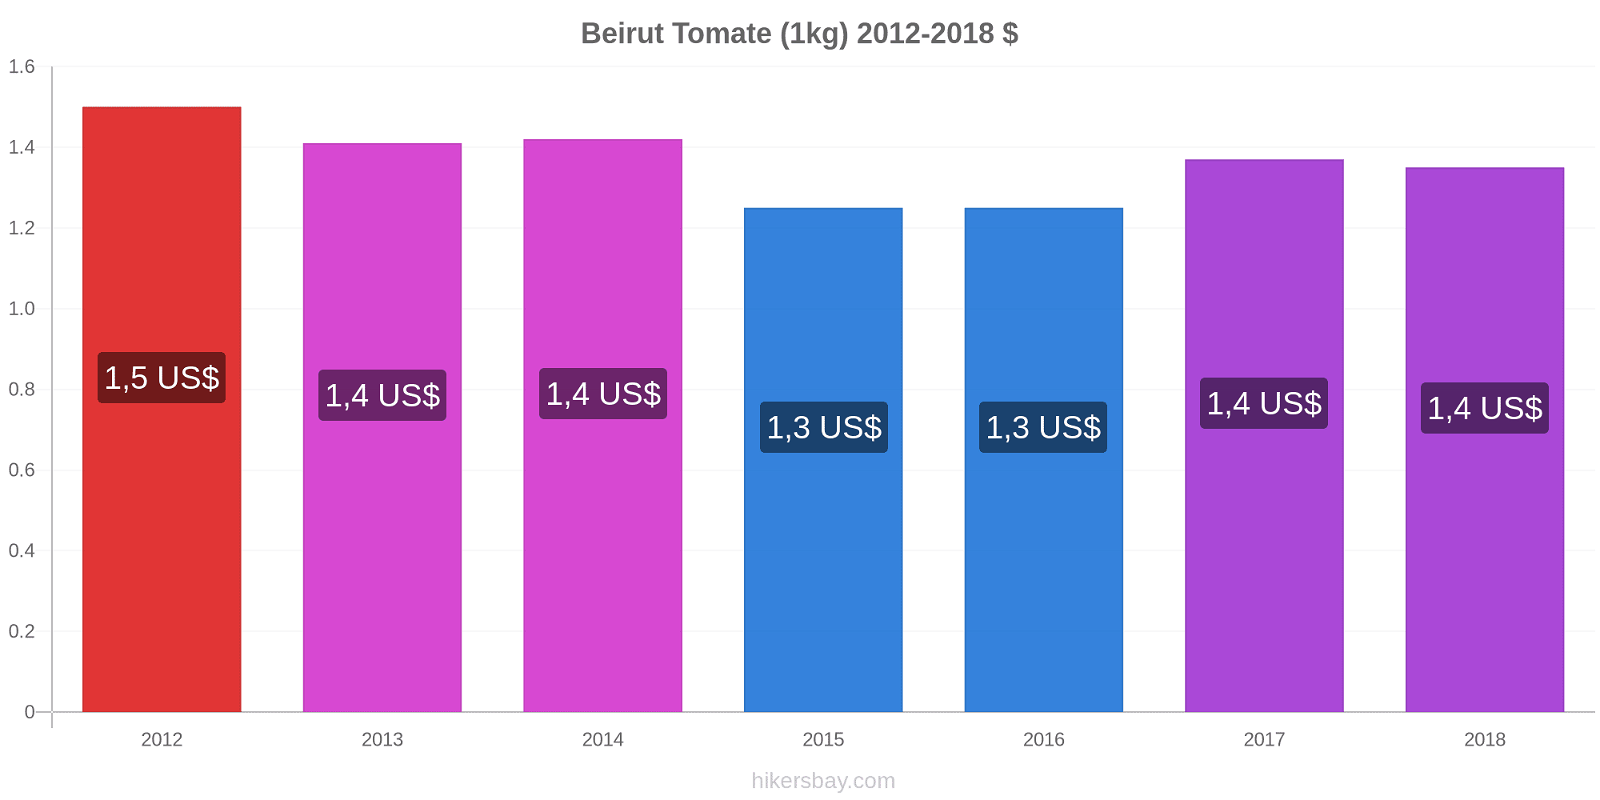 Beirut cambios de precios Tomate (1kg) hikersbay.com